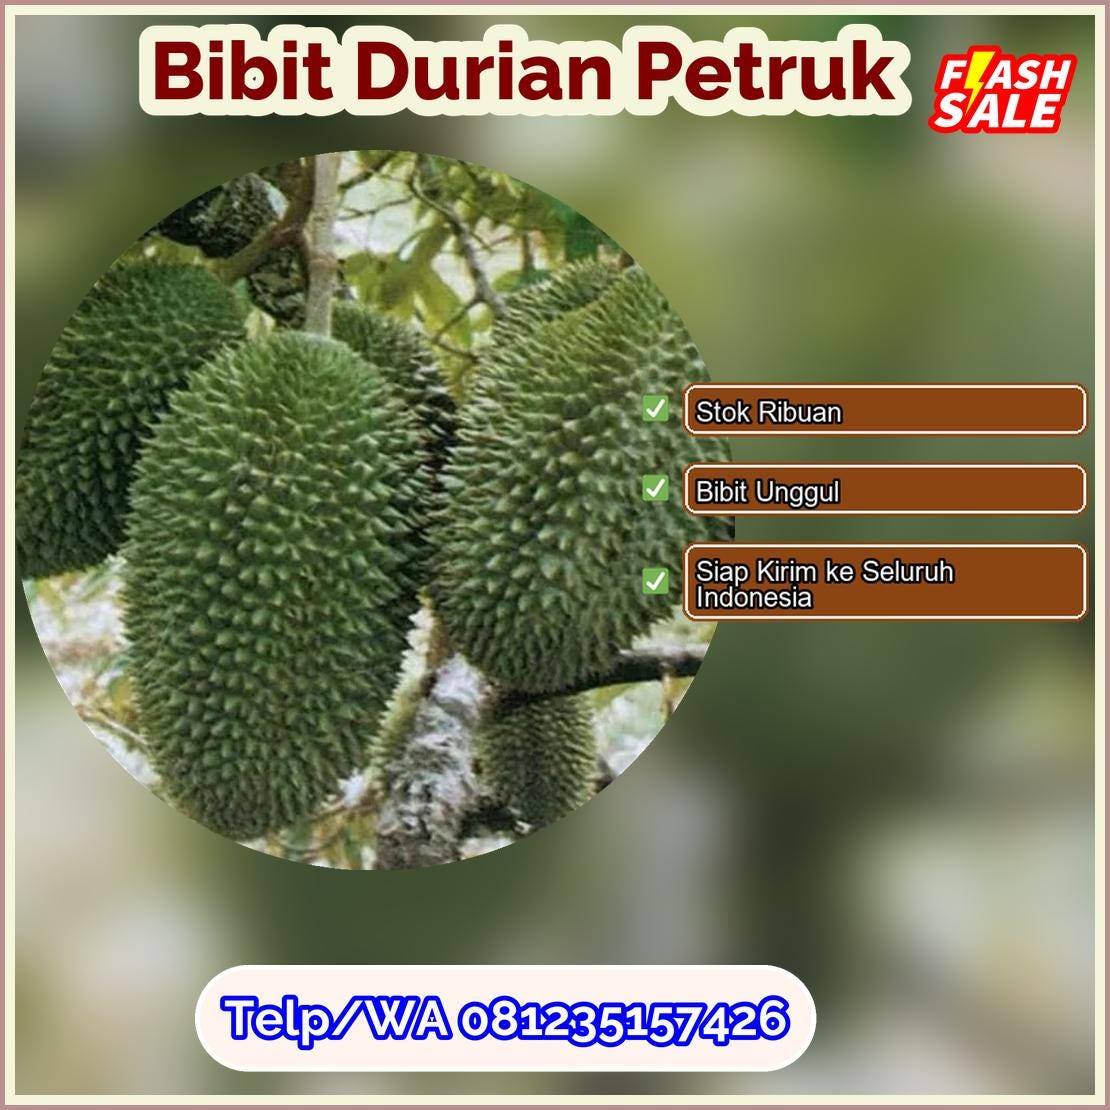 Harga Bibit Durian Petruk Kota Ambon